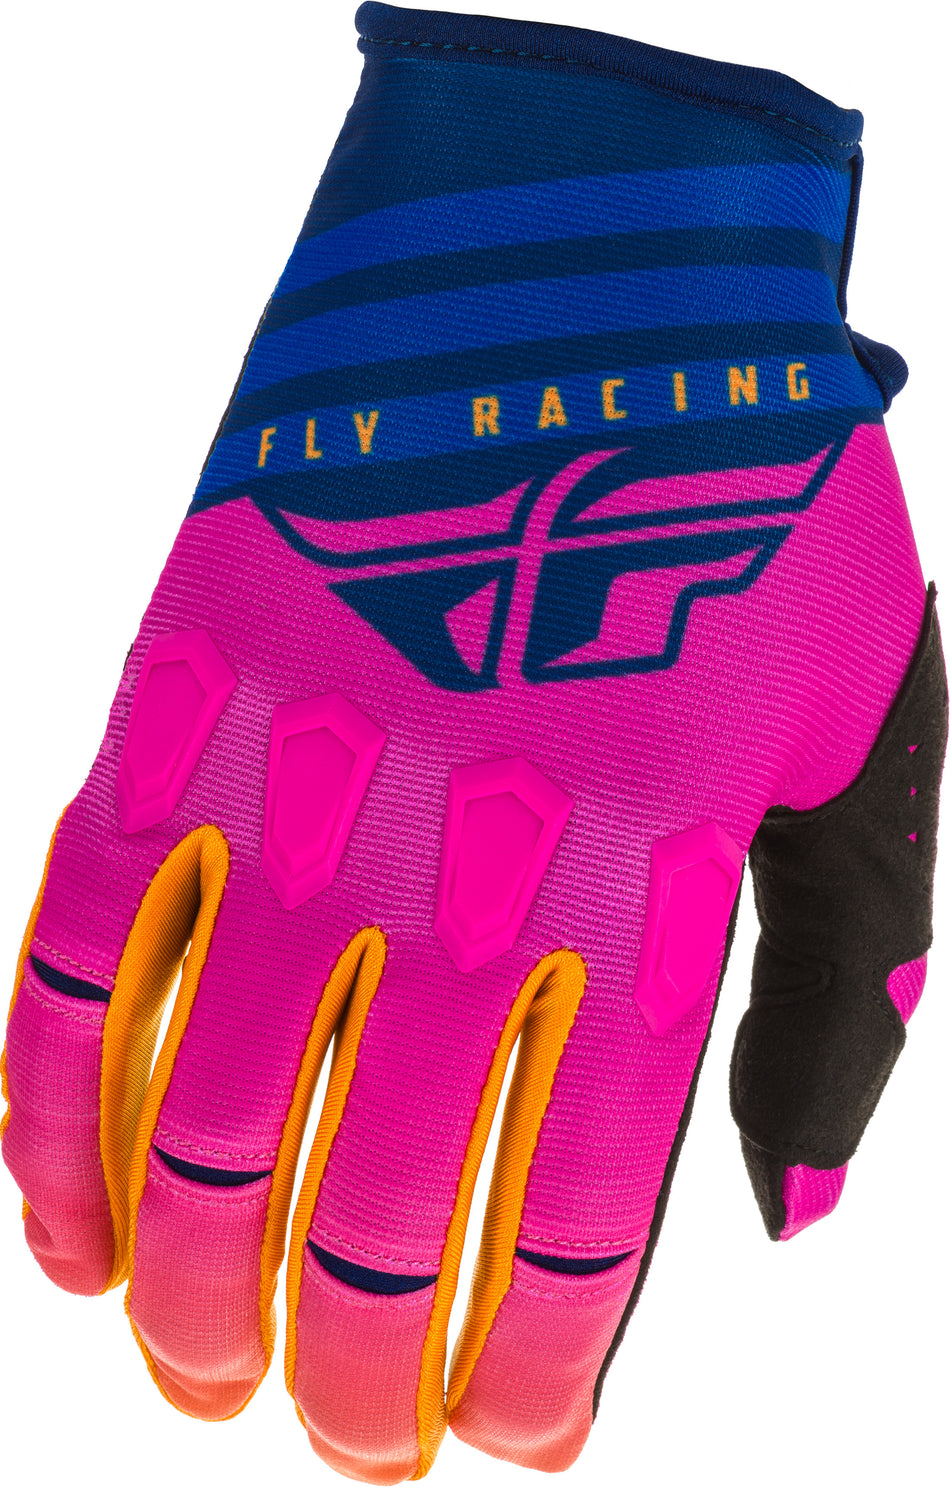 FLY RACING Kinetic K220 Gloves Midnight/Blue/Orange Sz 05 373-51905